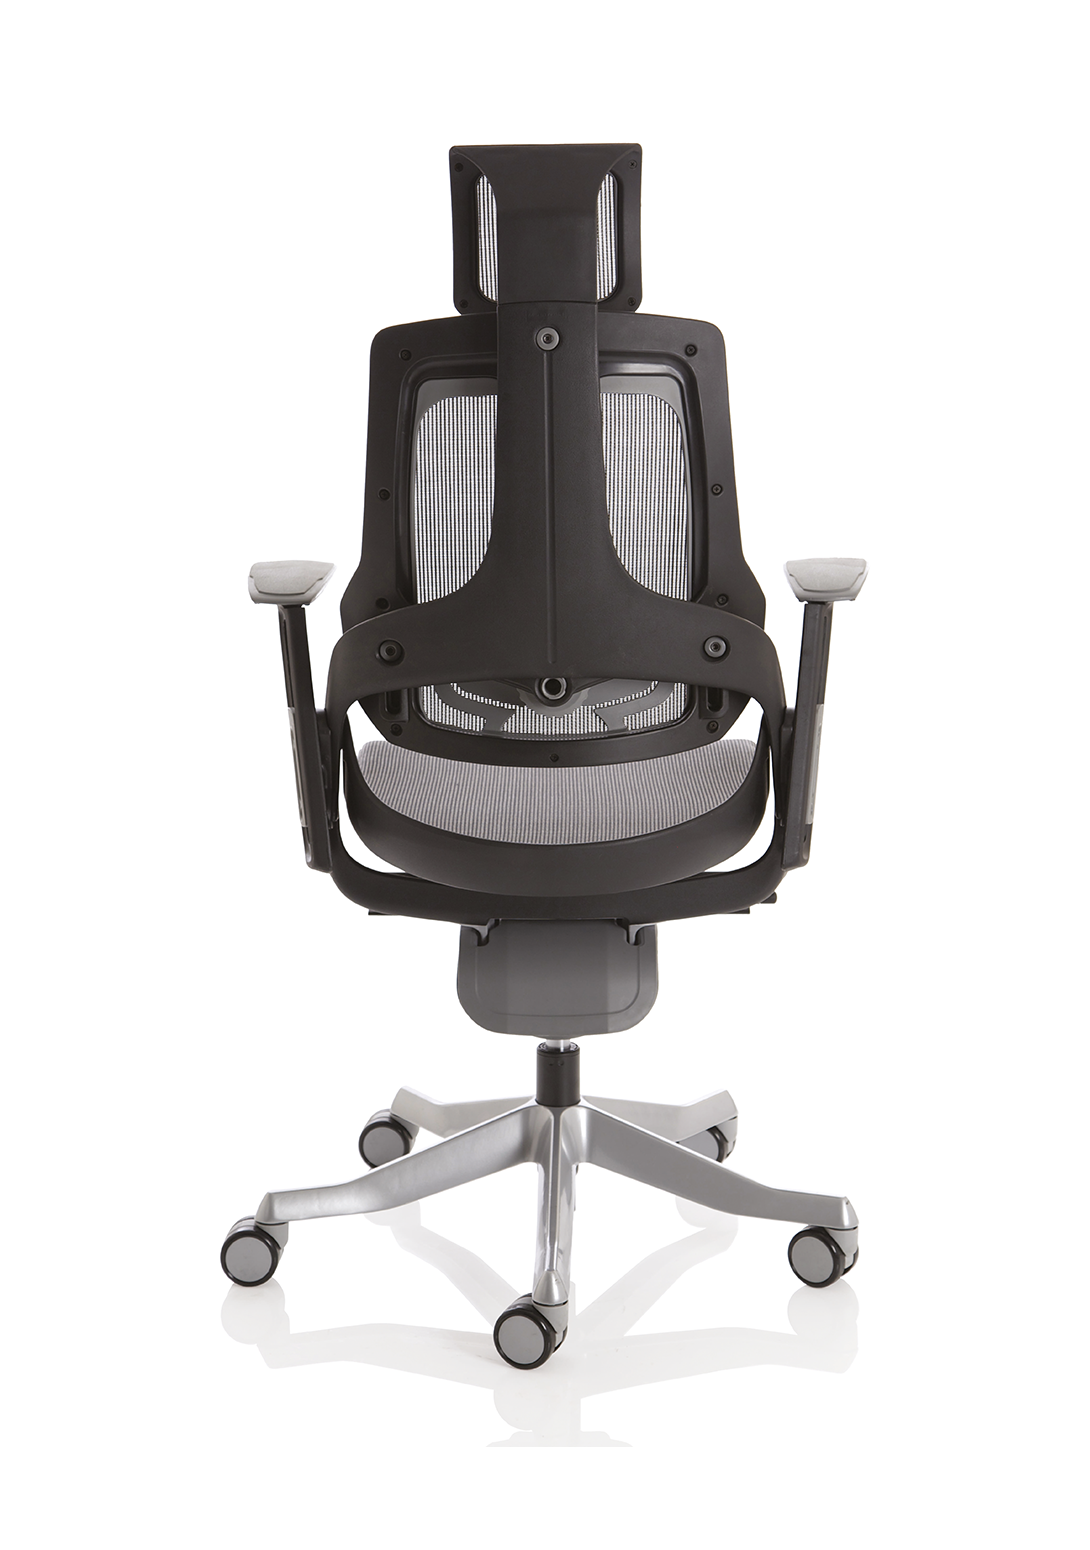 Zure Exec Black Shell Home Office Chair | Executive Chair | Home Office Furniture | Mesh Chair | Chrome detail | Swivel Chair | Mesh Swivel Chair